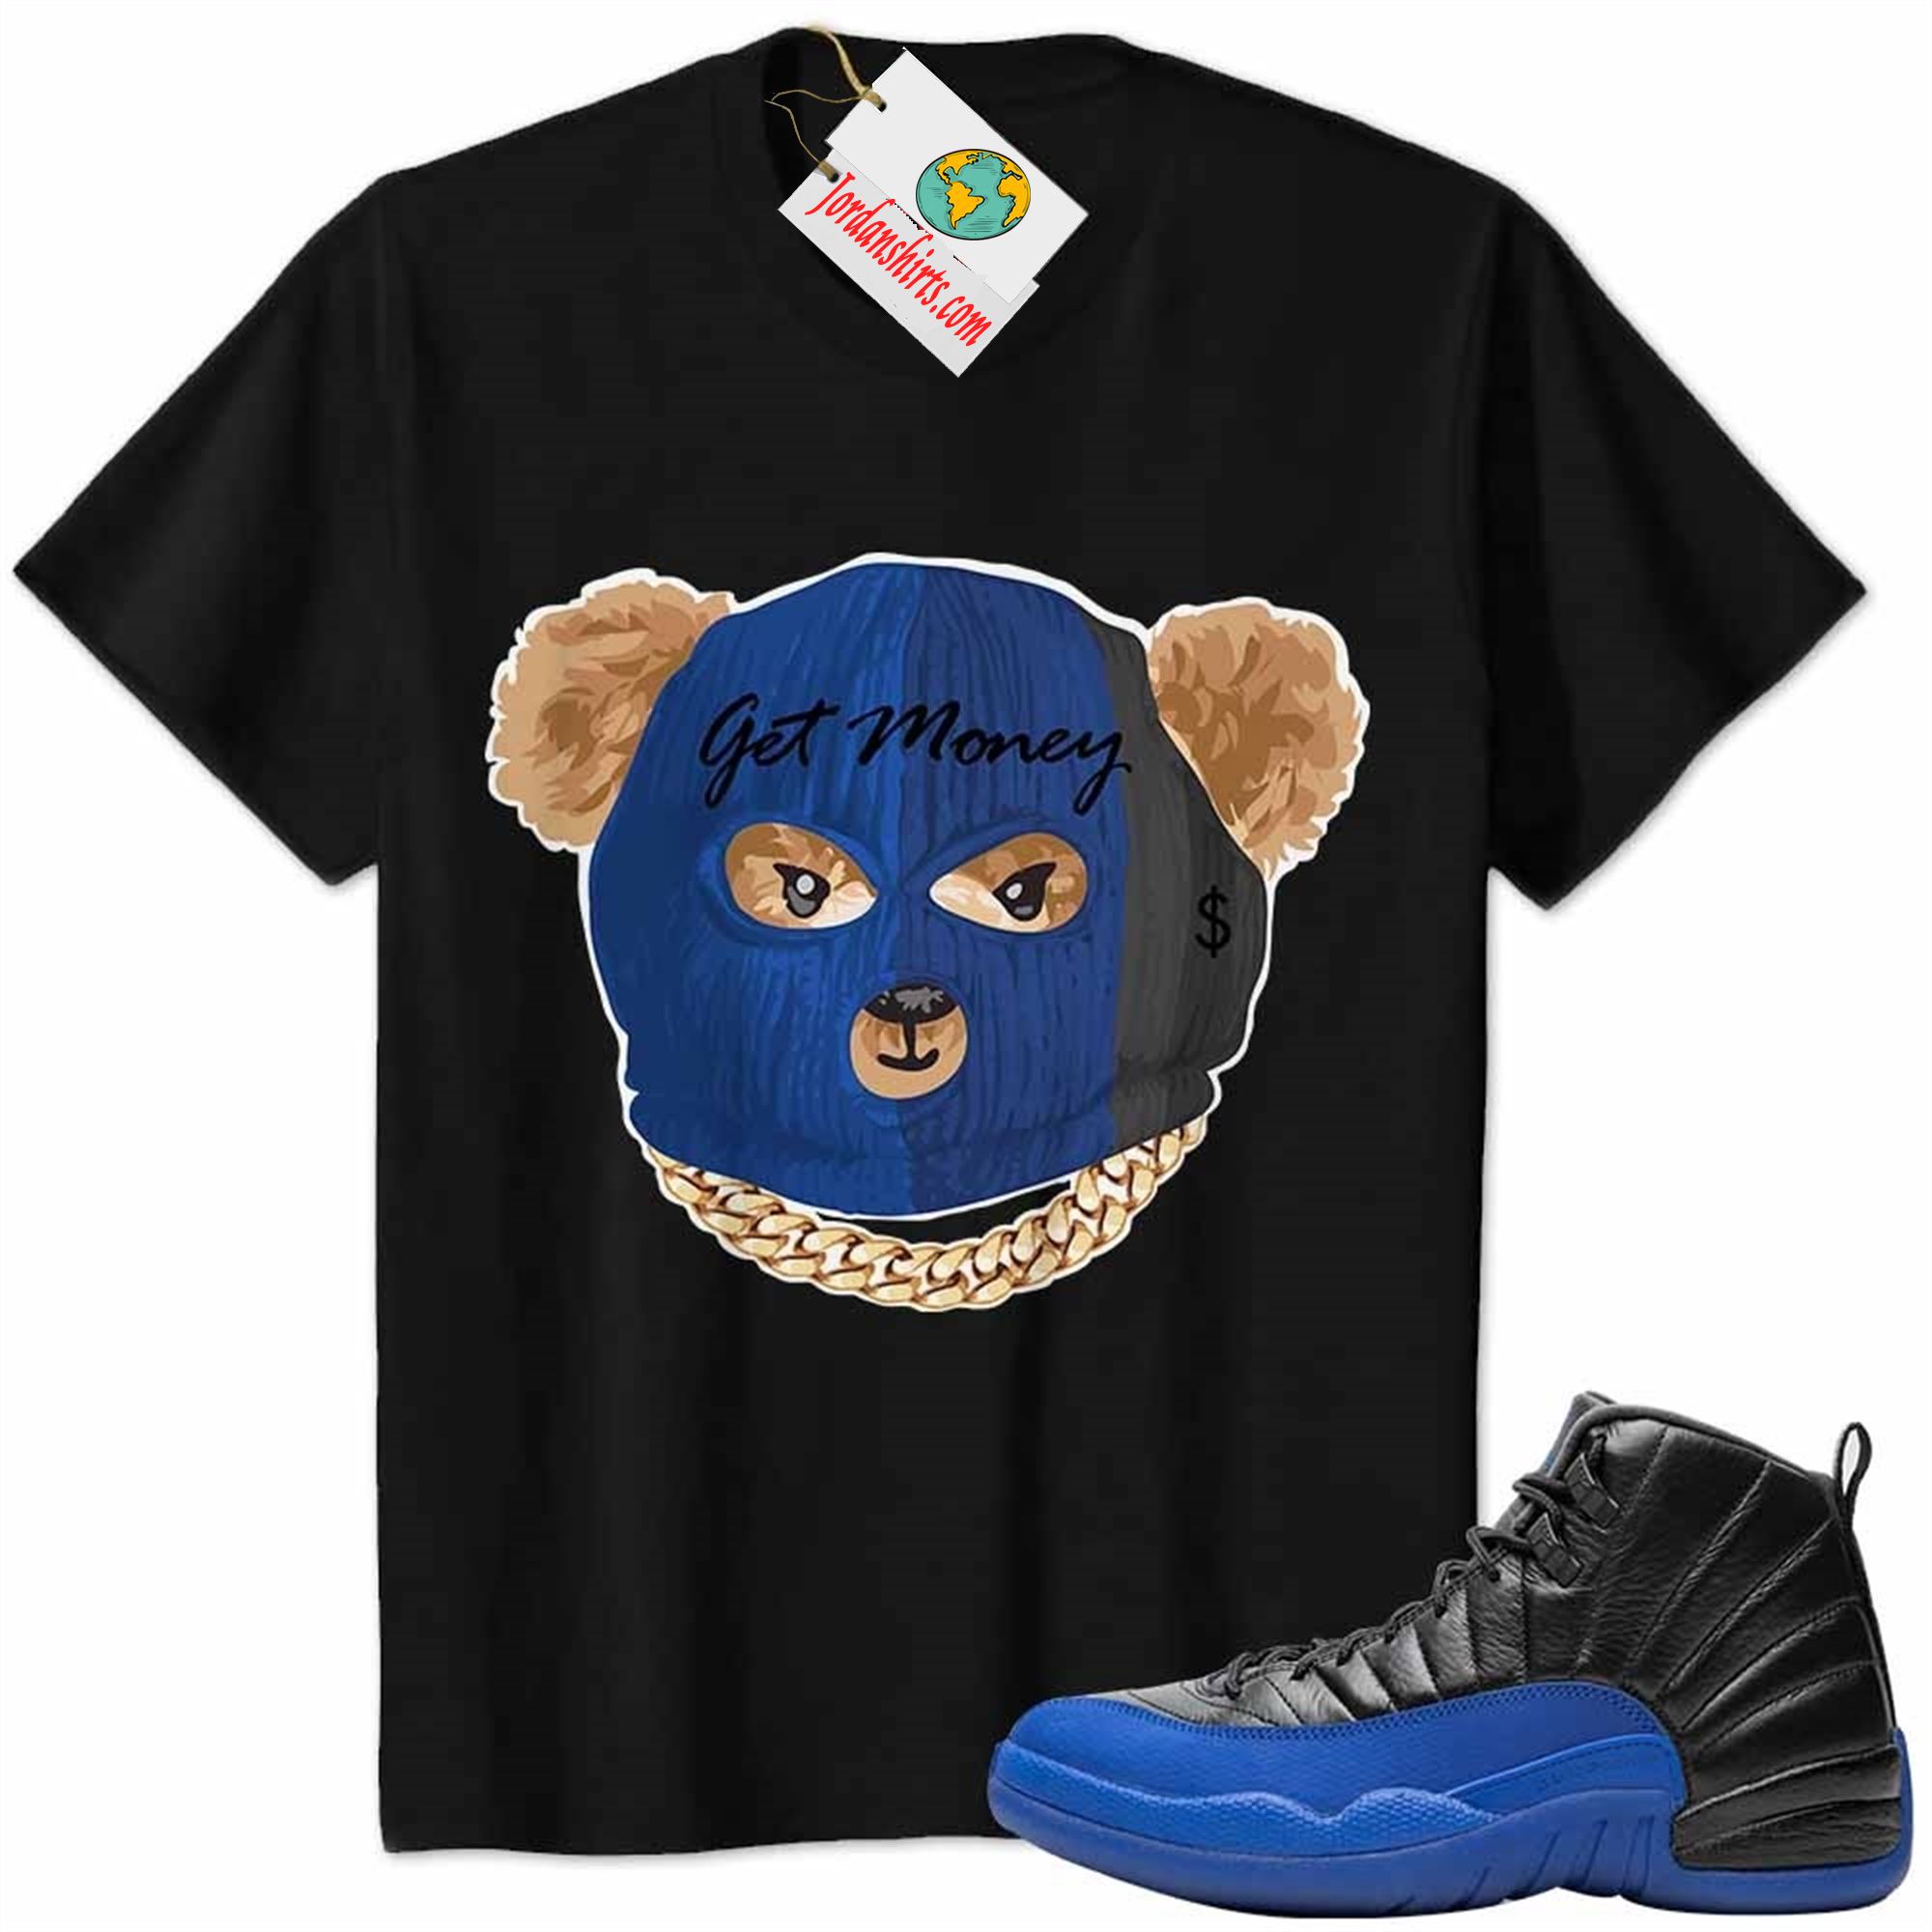 Jordan 12 Shirt, Robber Teddy Get Money Ski Mask Black Air Jordan 12 Game Royal 12s Size Up To 5xl